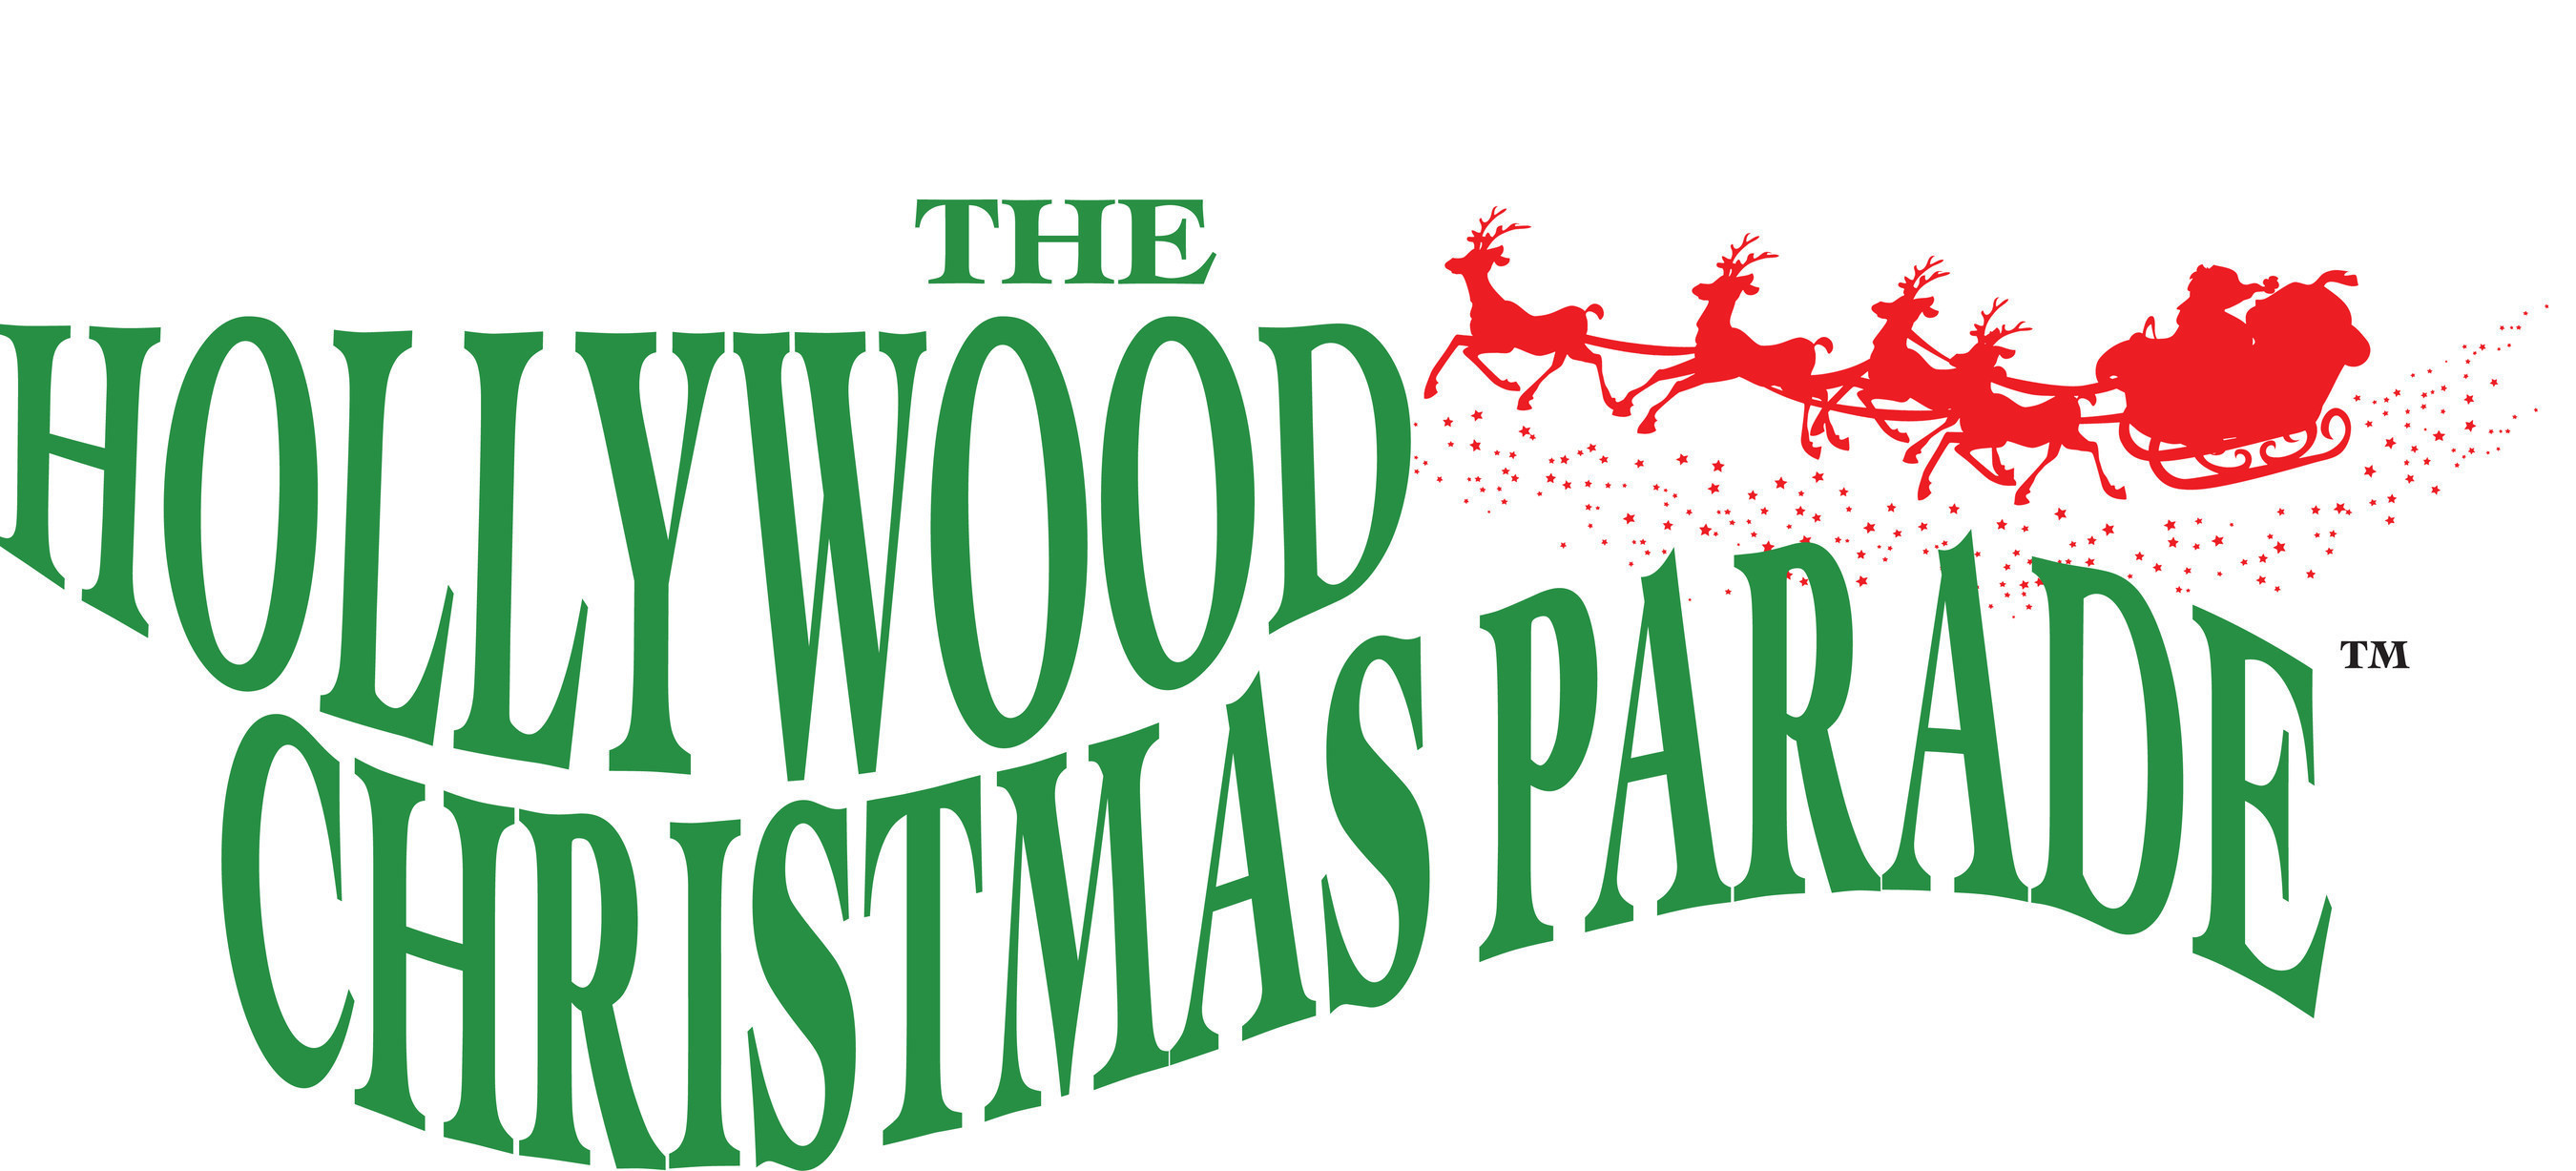 84th Annual Hollywood Christmas Parade Announces Penn & Teller As The Grand Marshals For 2015